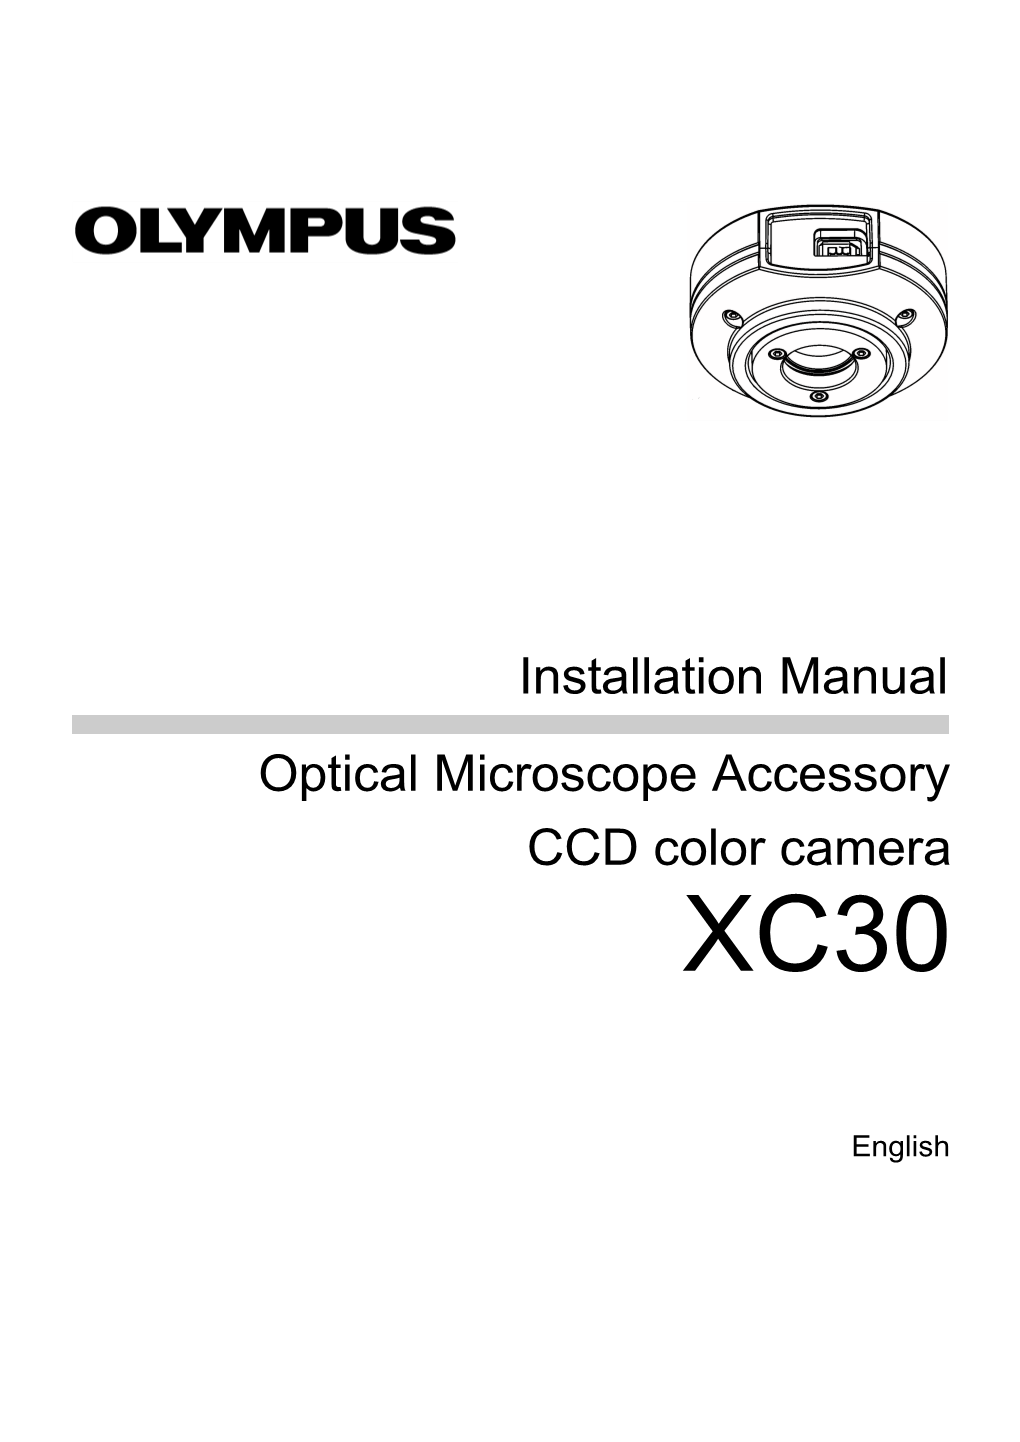 Installation Manual CCD Color Camera Optical Microscope Accessory